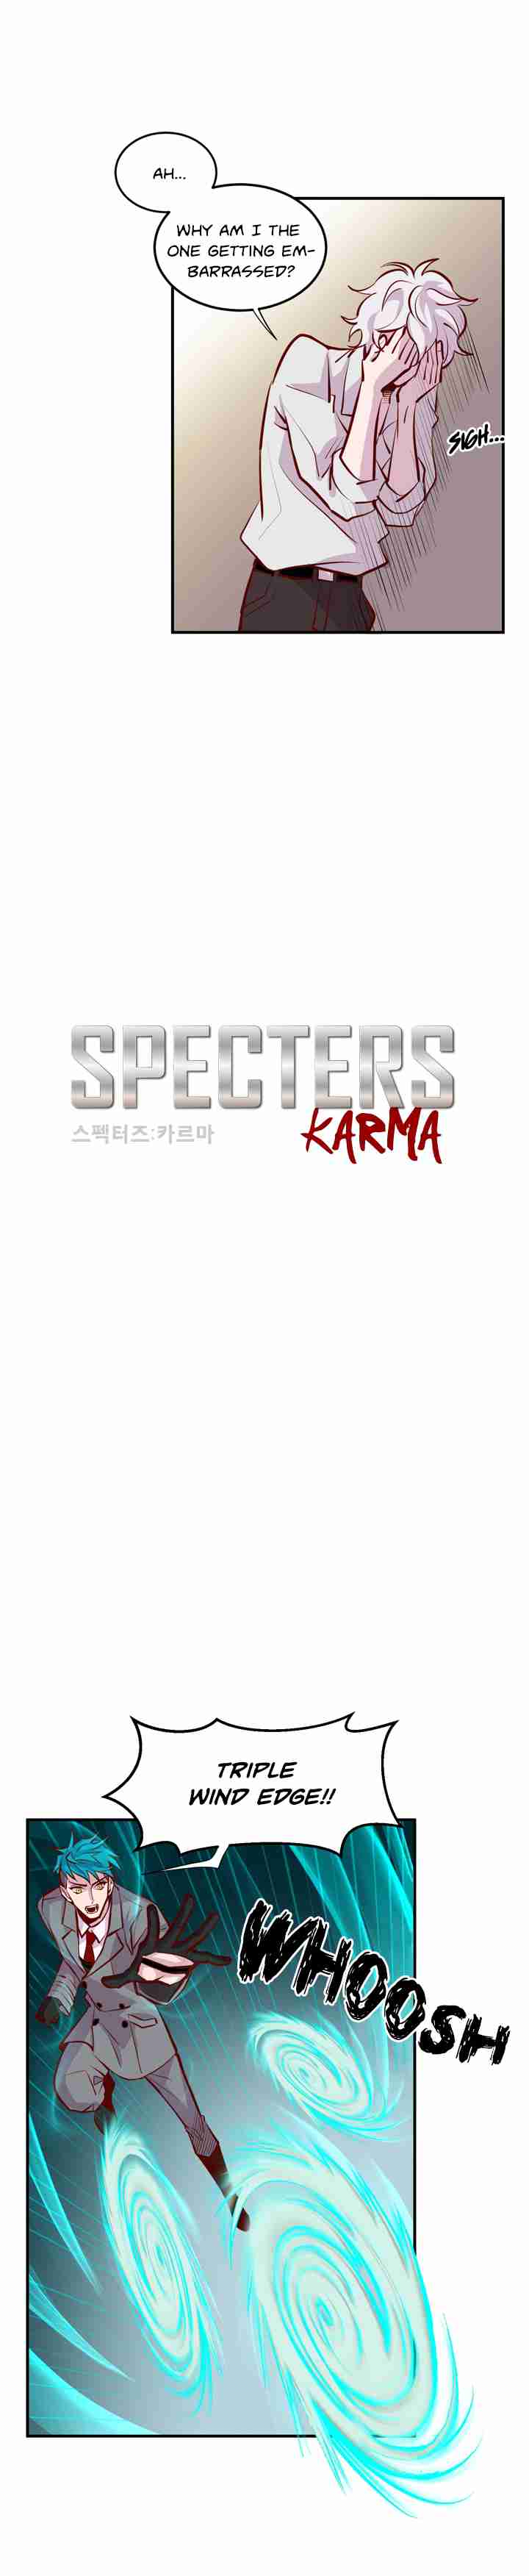 Specters : Karma Ch. 18 Teamwork